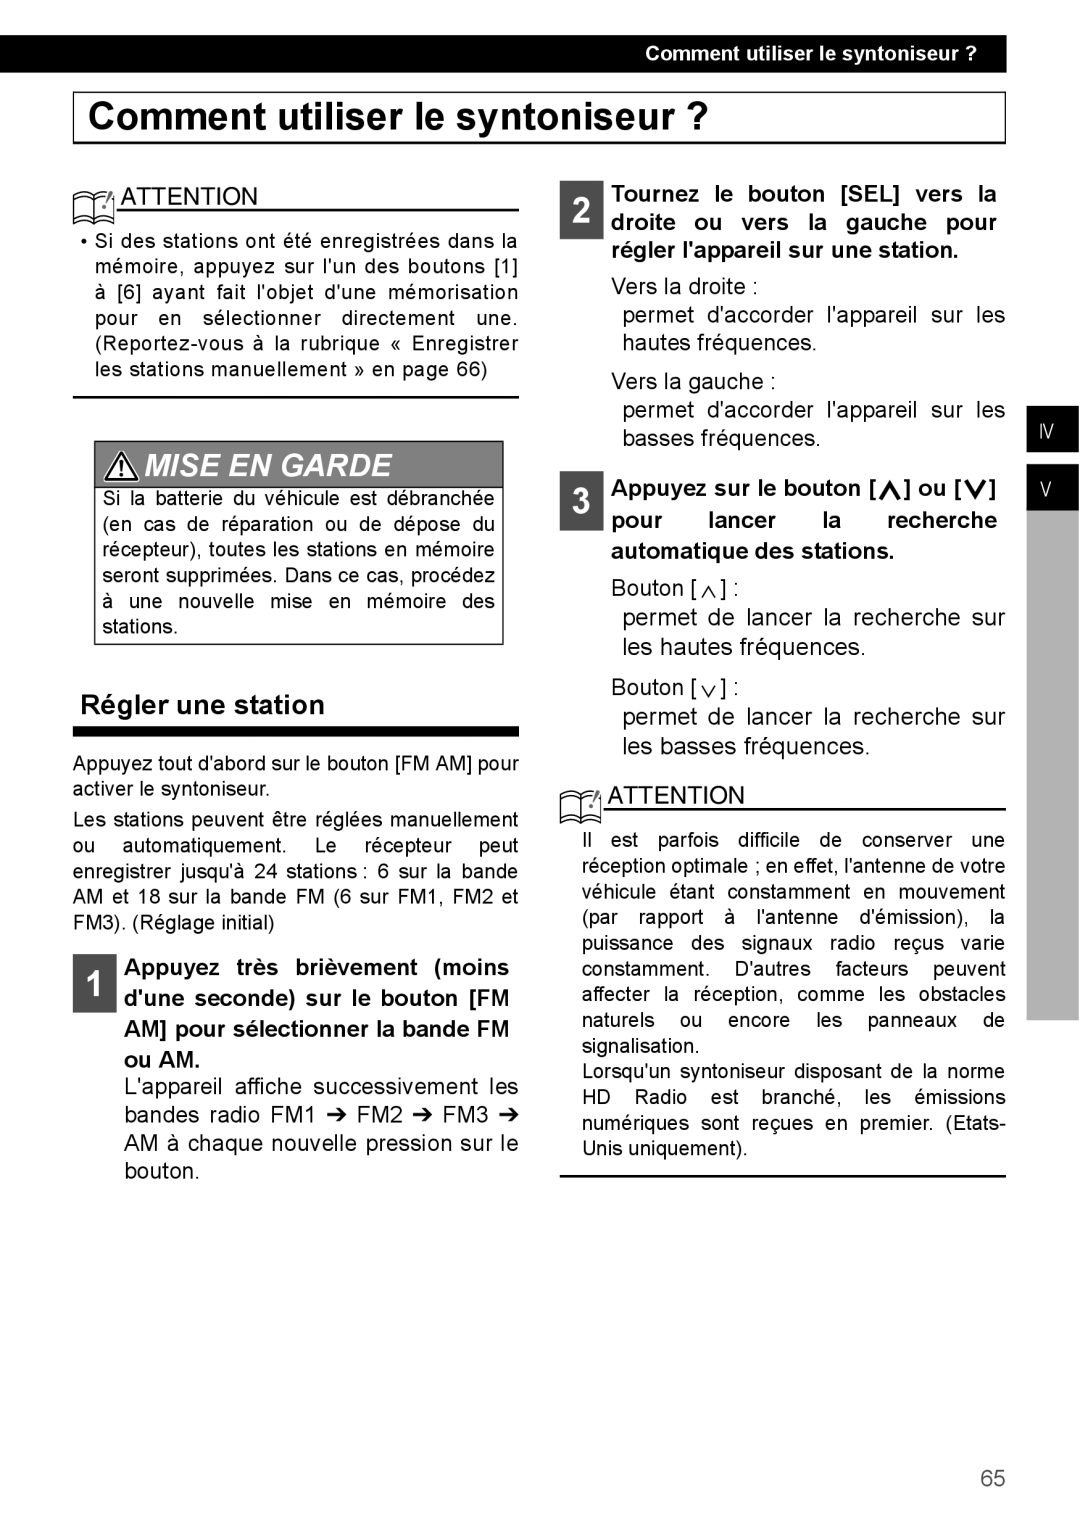 Eclipse - Fujitsu Ten CD2000 manual Comment utiliser le syntoniseur ?, Mise En Garde, Régler une station, Iv V 